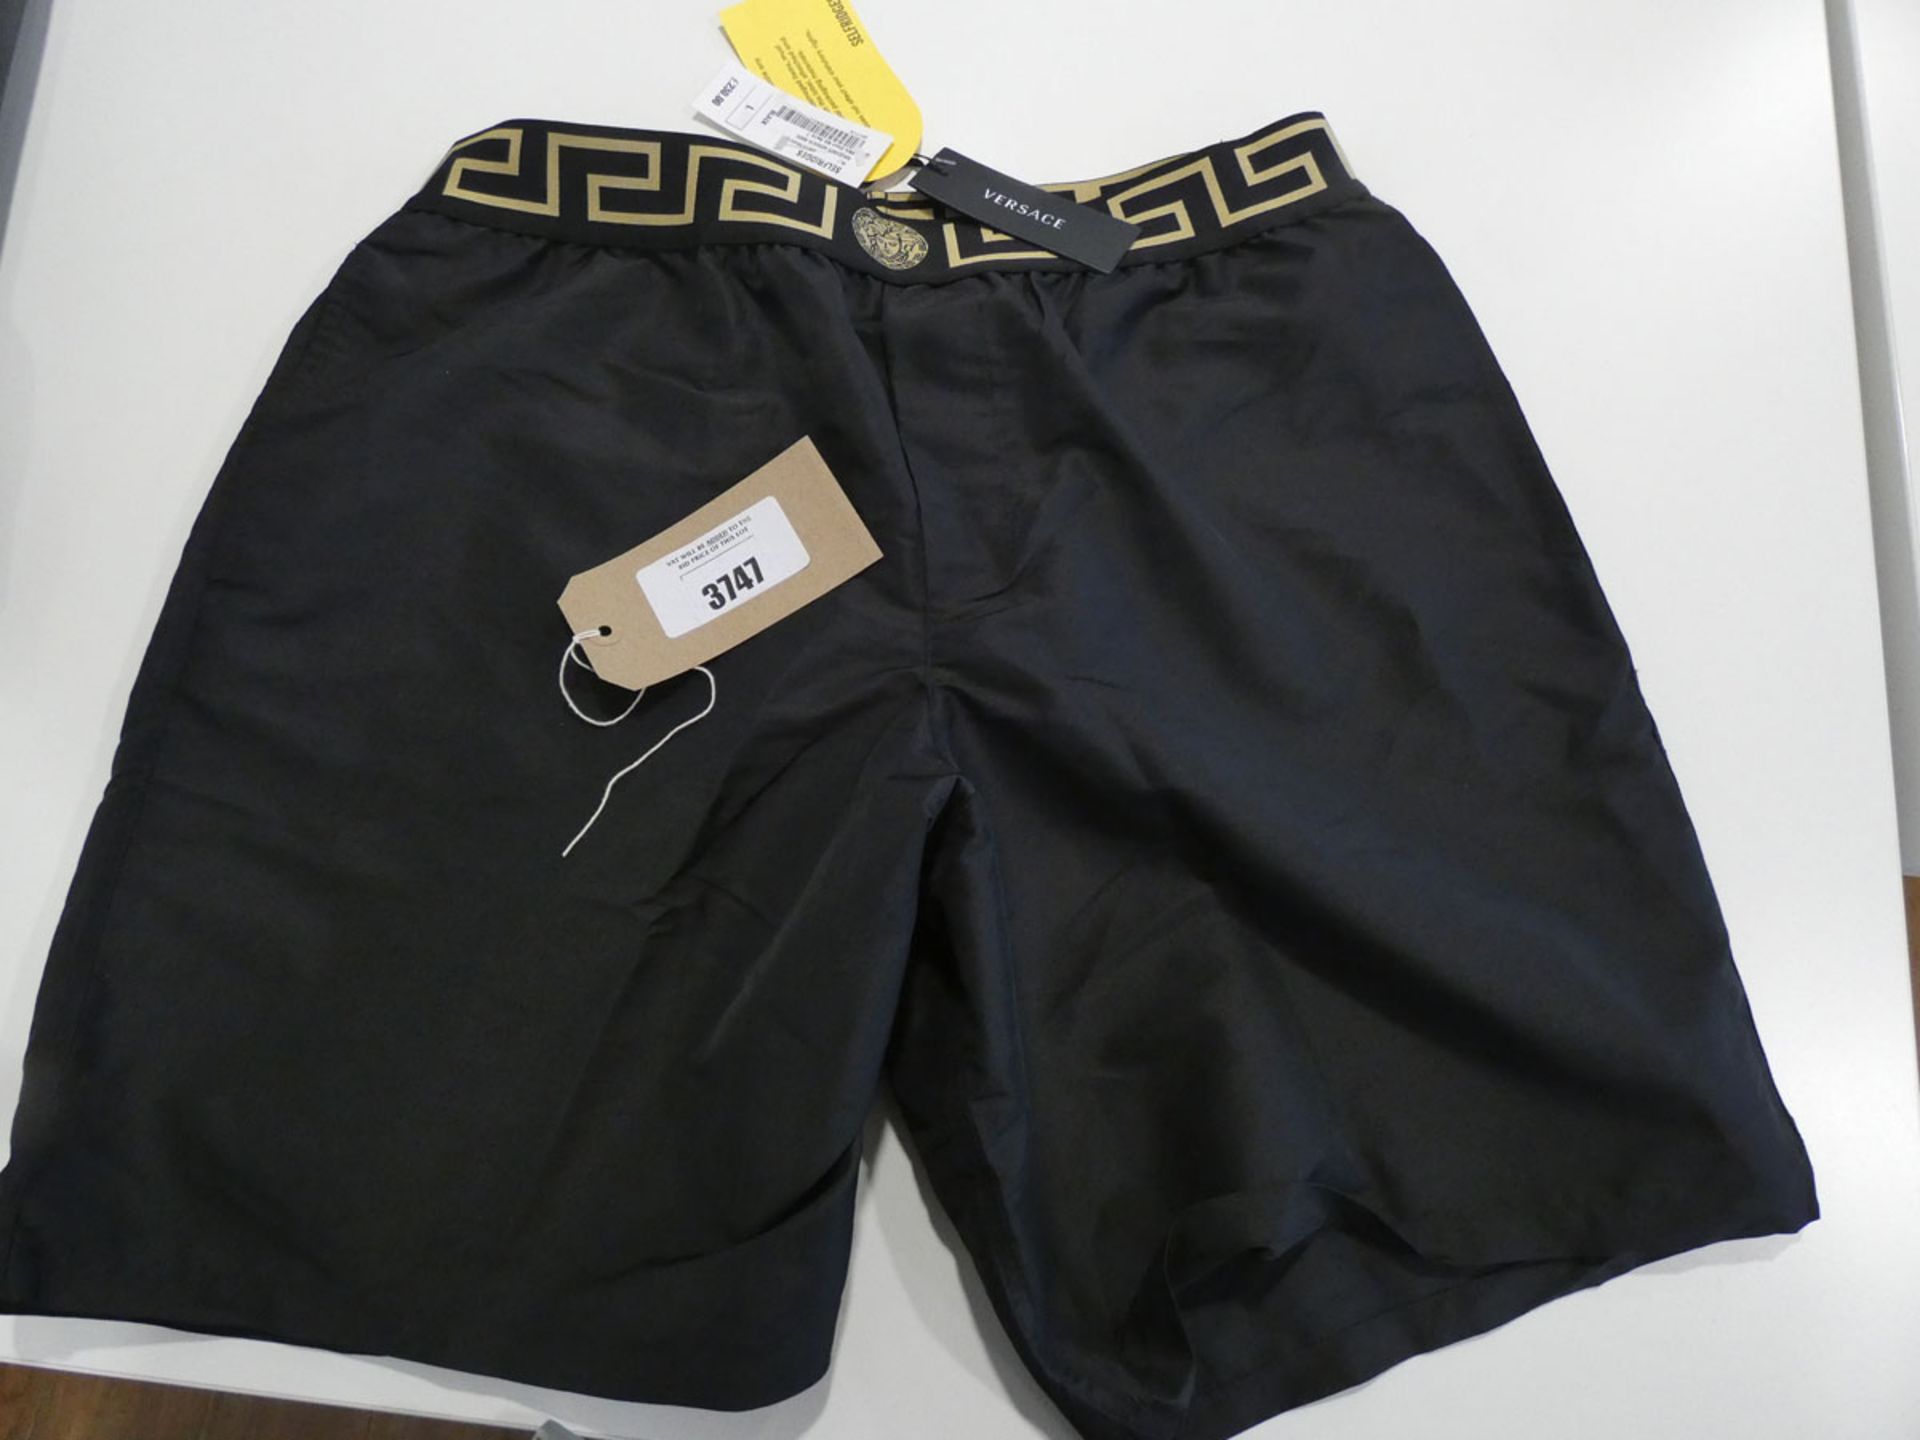 Versace men's short WB swim T shorts in black size Large